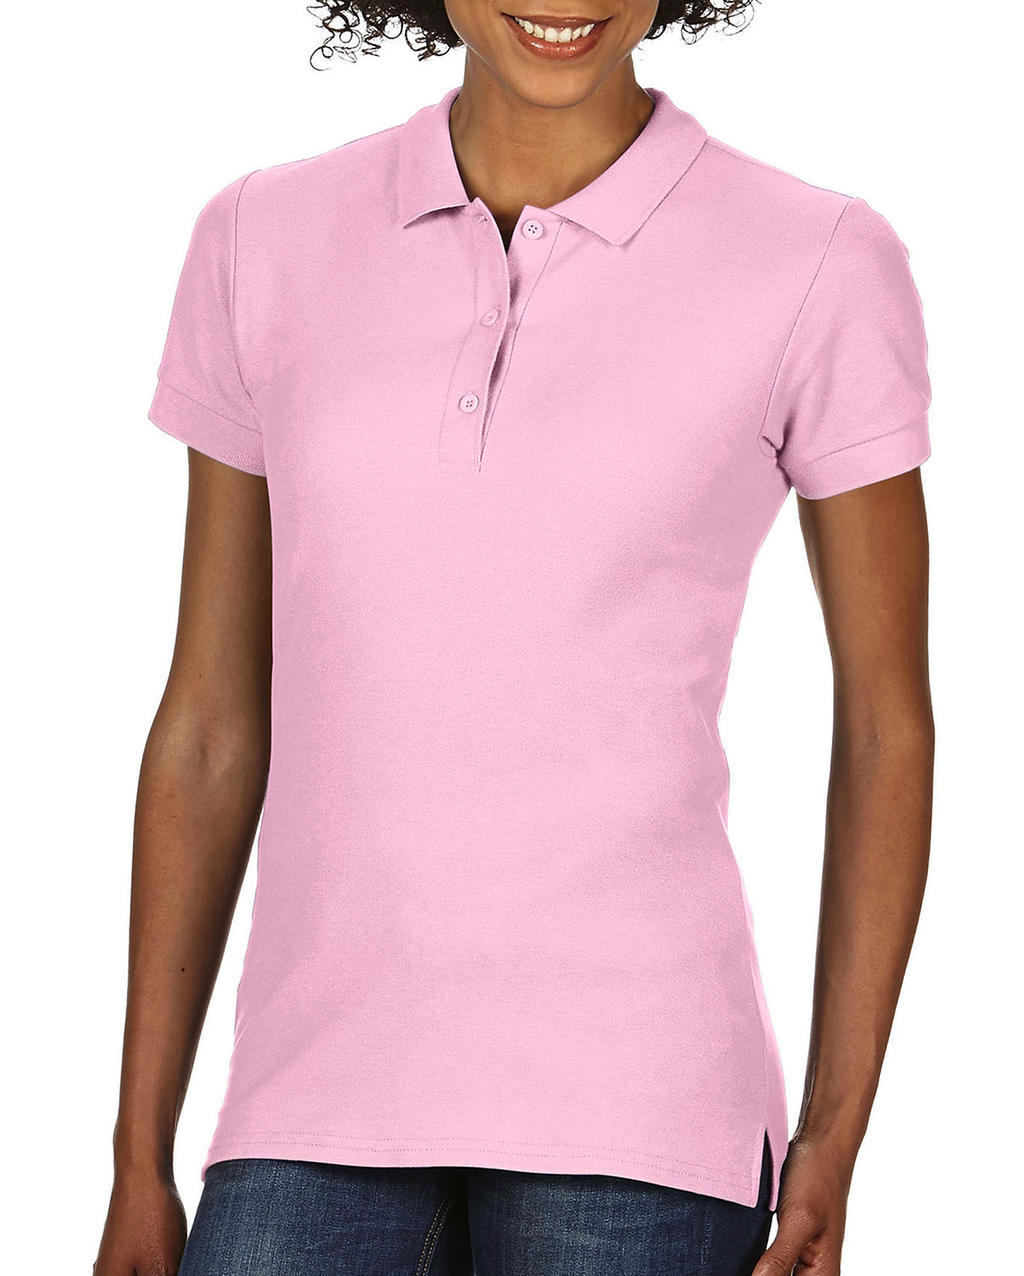  Premium Cotton Ladies Double Piqu? Polo in Farbe Light Pink